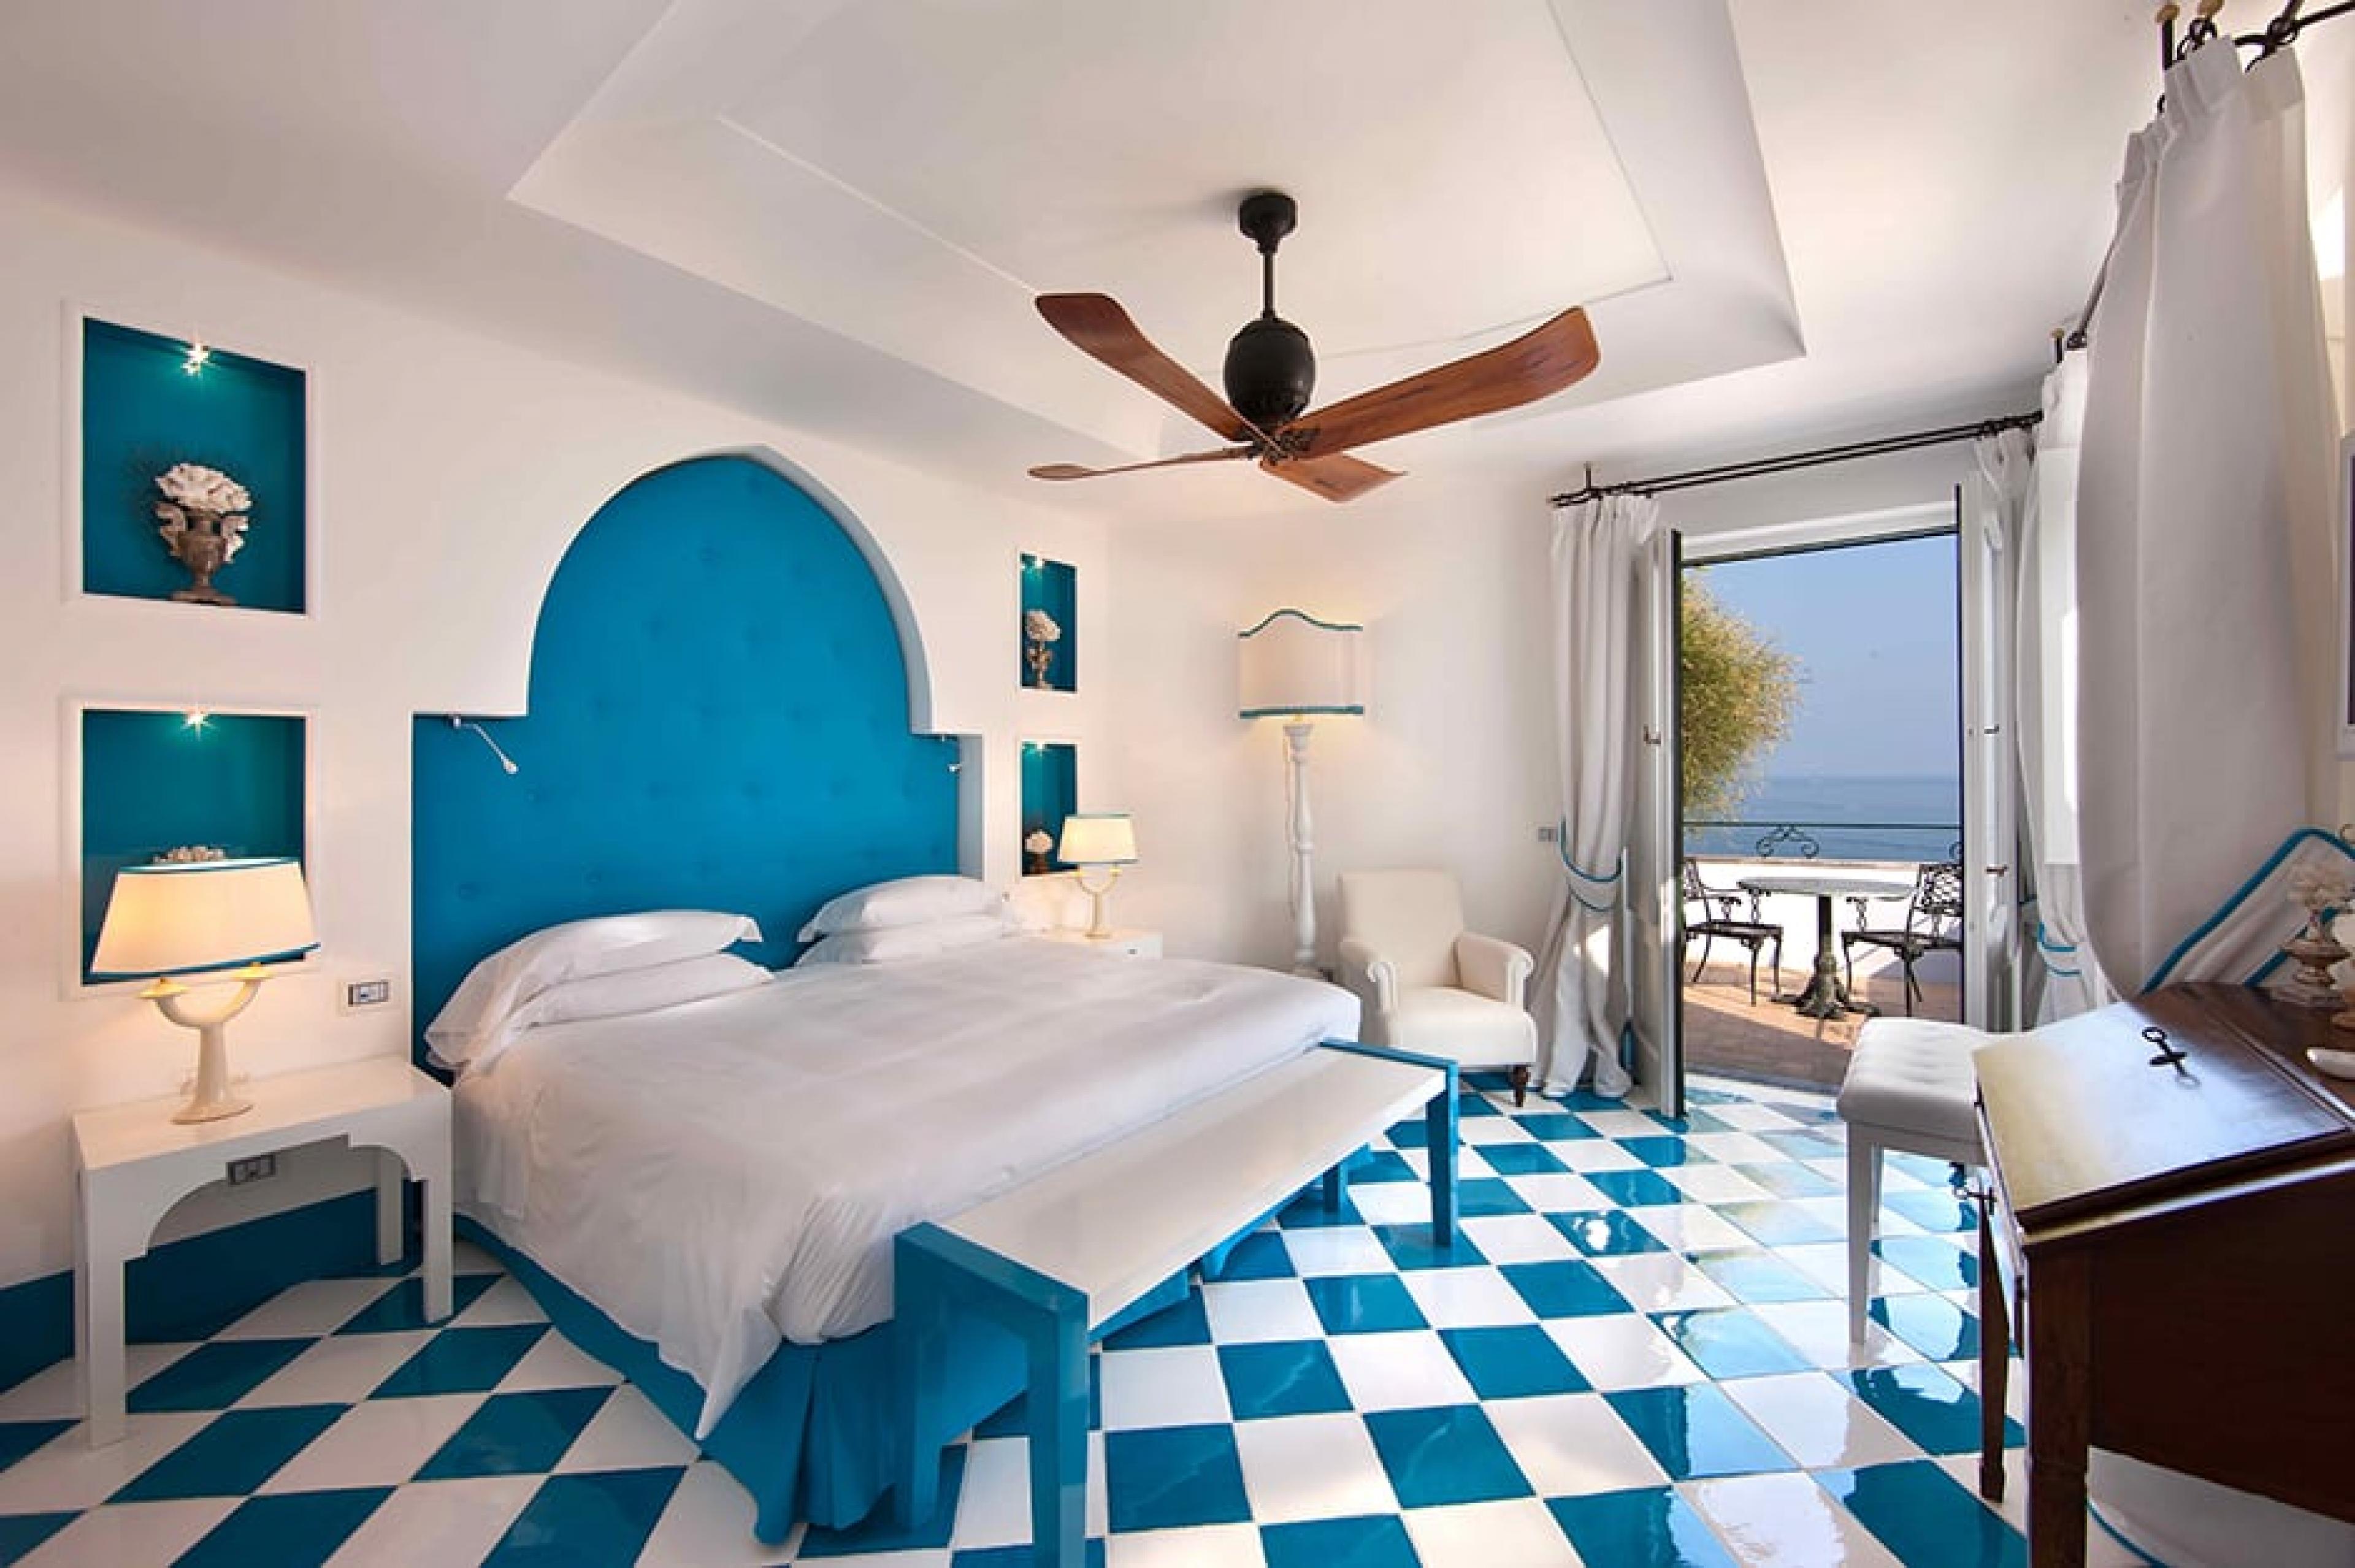 Bedroom with blue checked floor at  Villa TreVille, Amalfi Coast, Italy